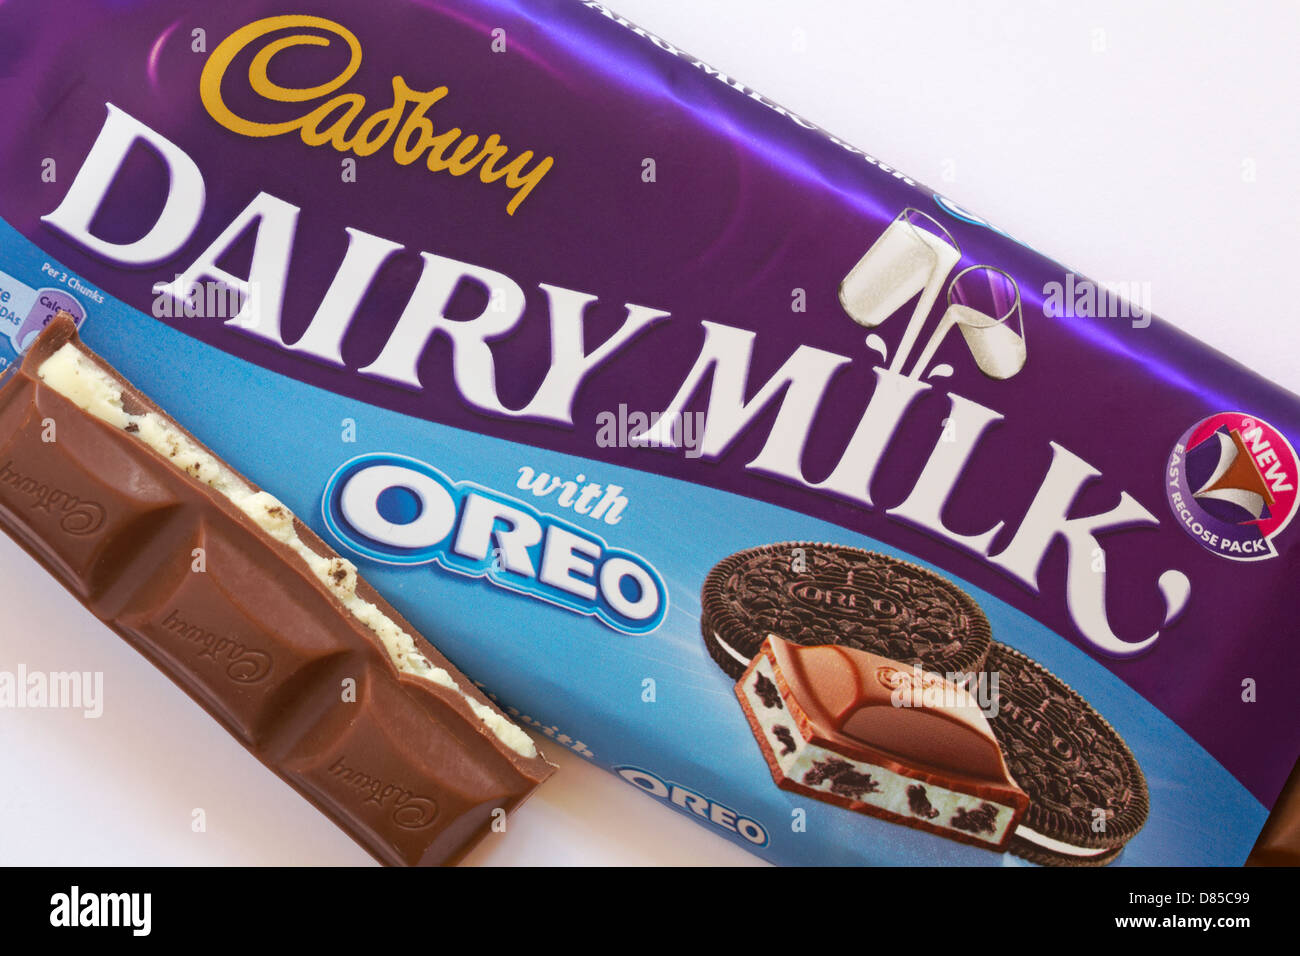 Cadbury Dairy Milk with Oreo chocolate bar with piece broken off set on  white background Stock Photo - Alamy